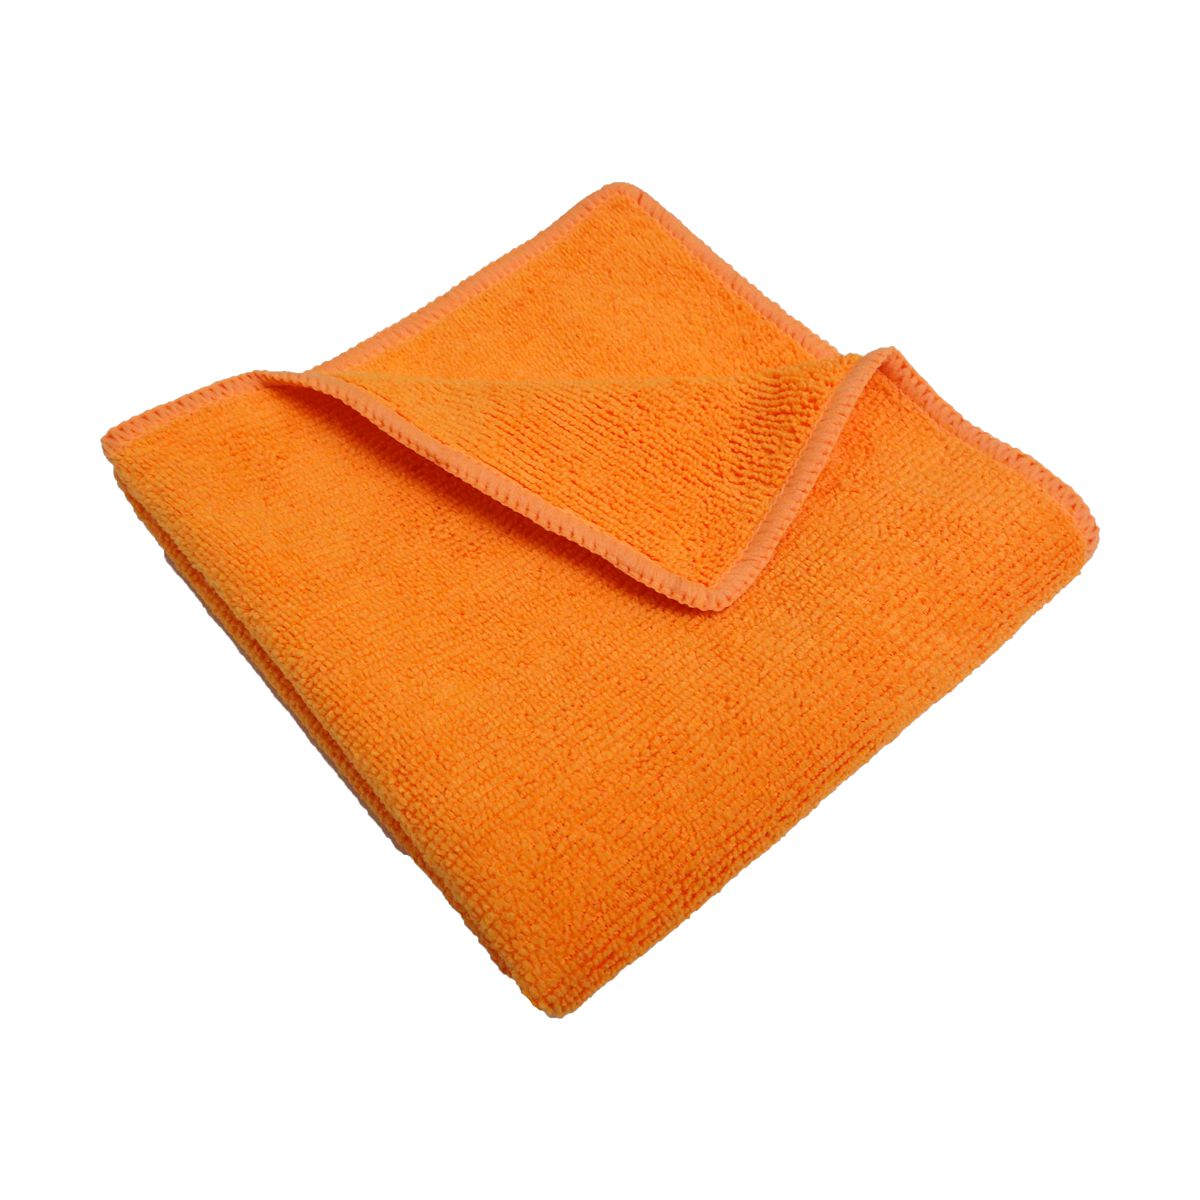 Pano microfibras laranja 30x40cm (pack 6)